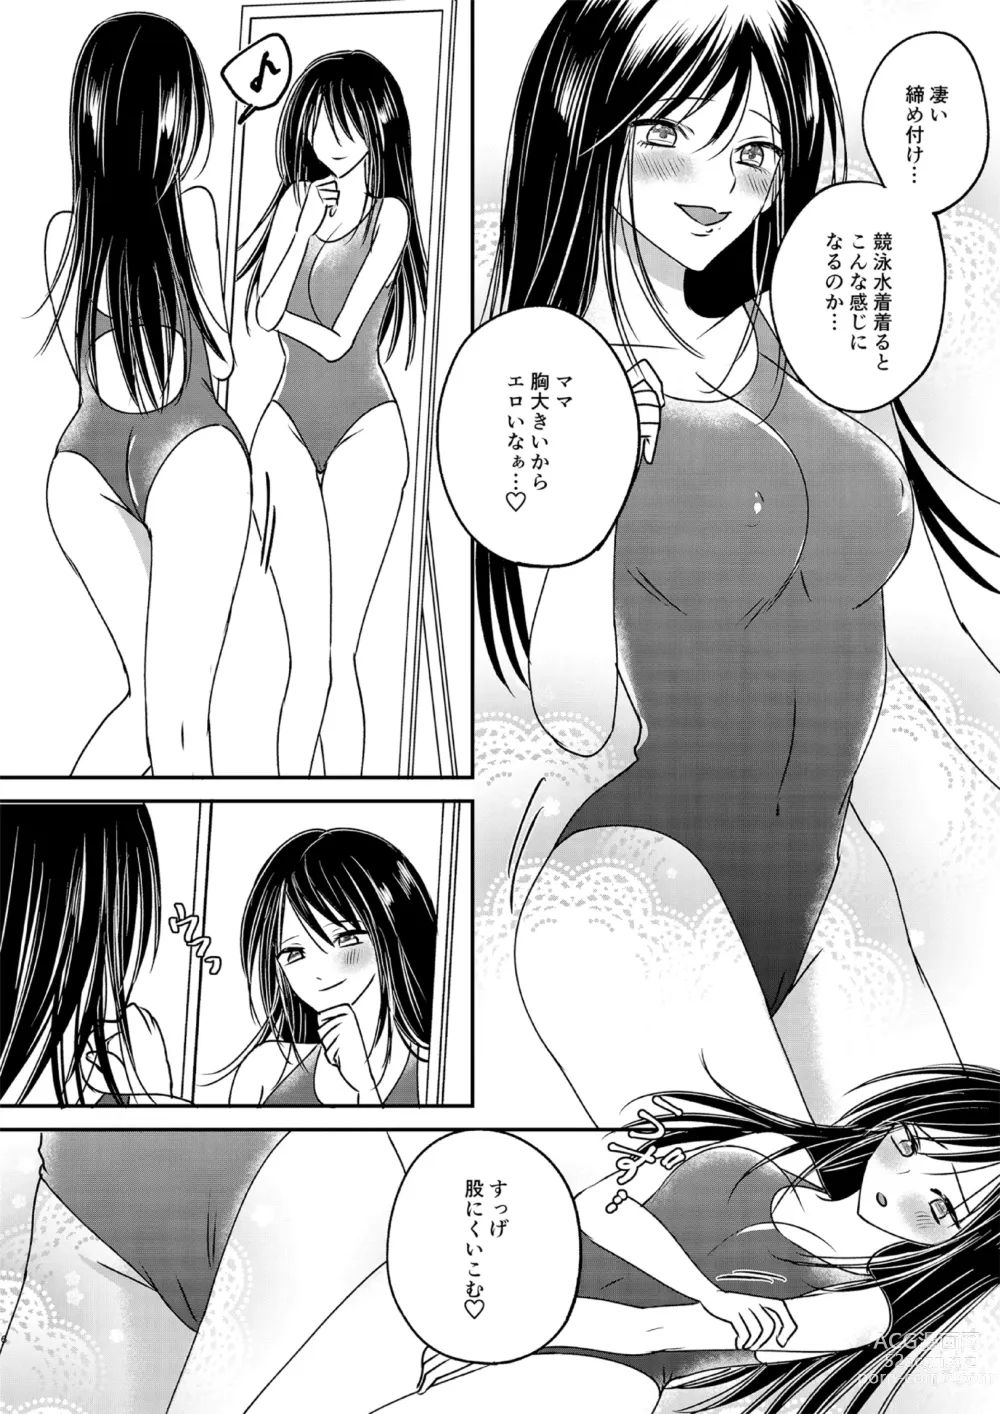 Page 6 of doujinshi Irekawari Cinderella 3